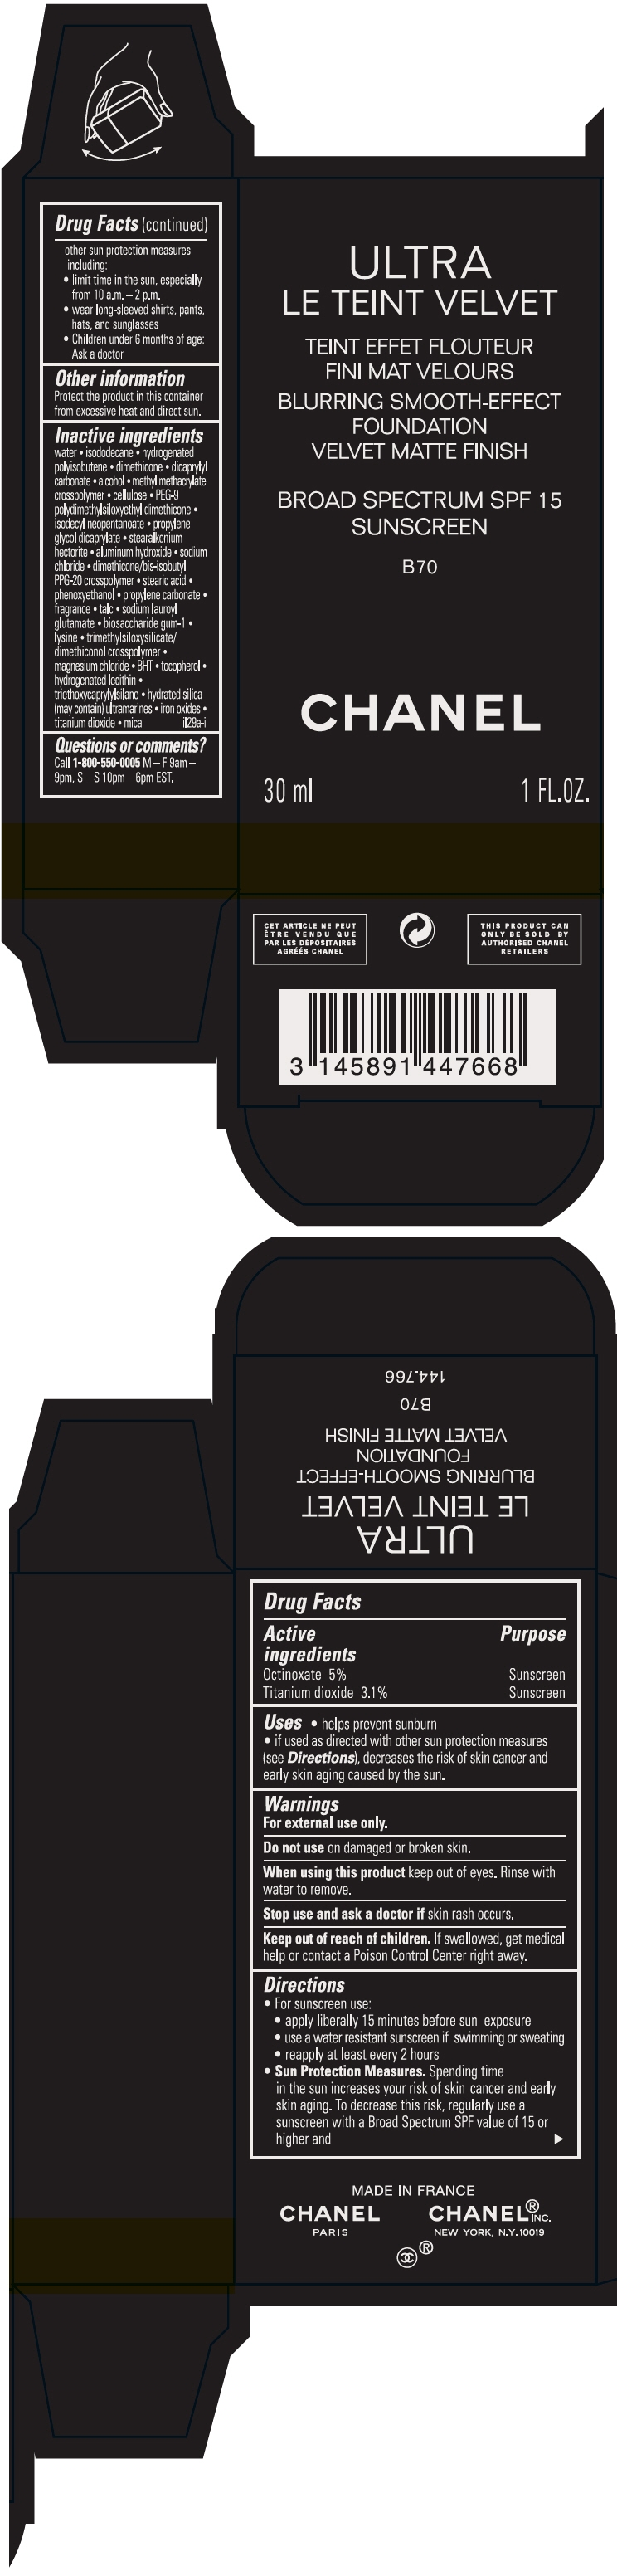 PRINCIPAL DISPLAY PANEL - 30 ml Bottle Carton - B70